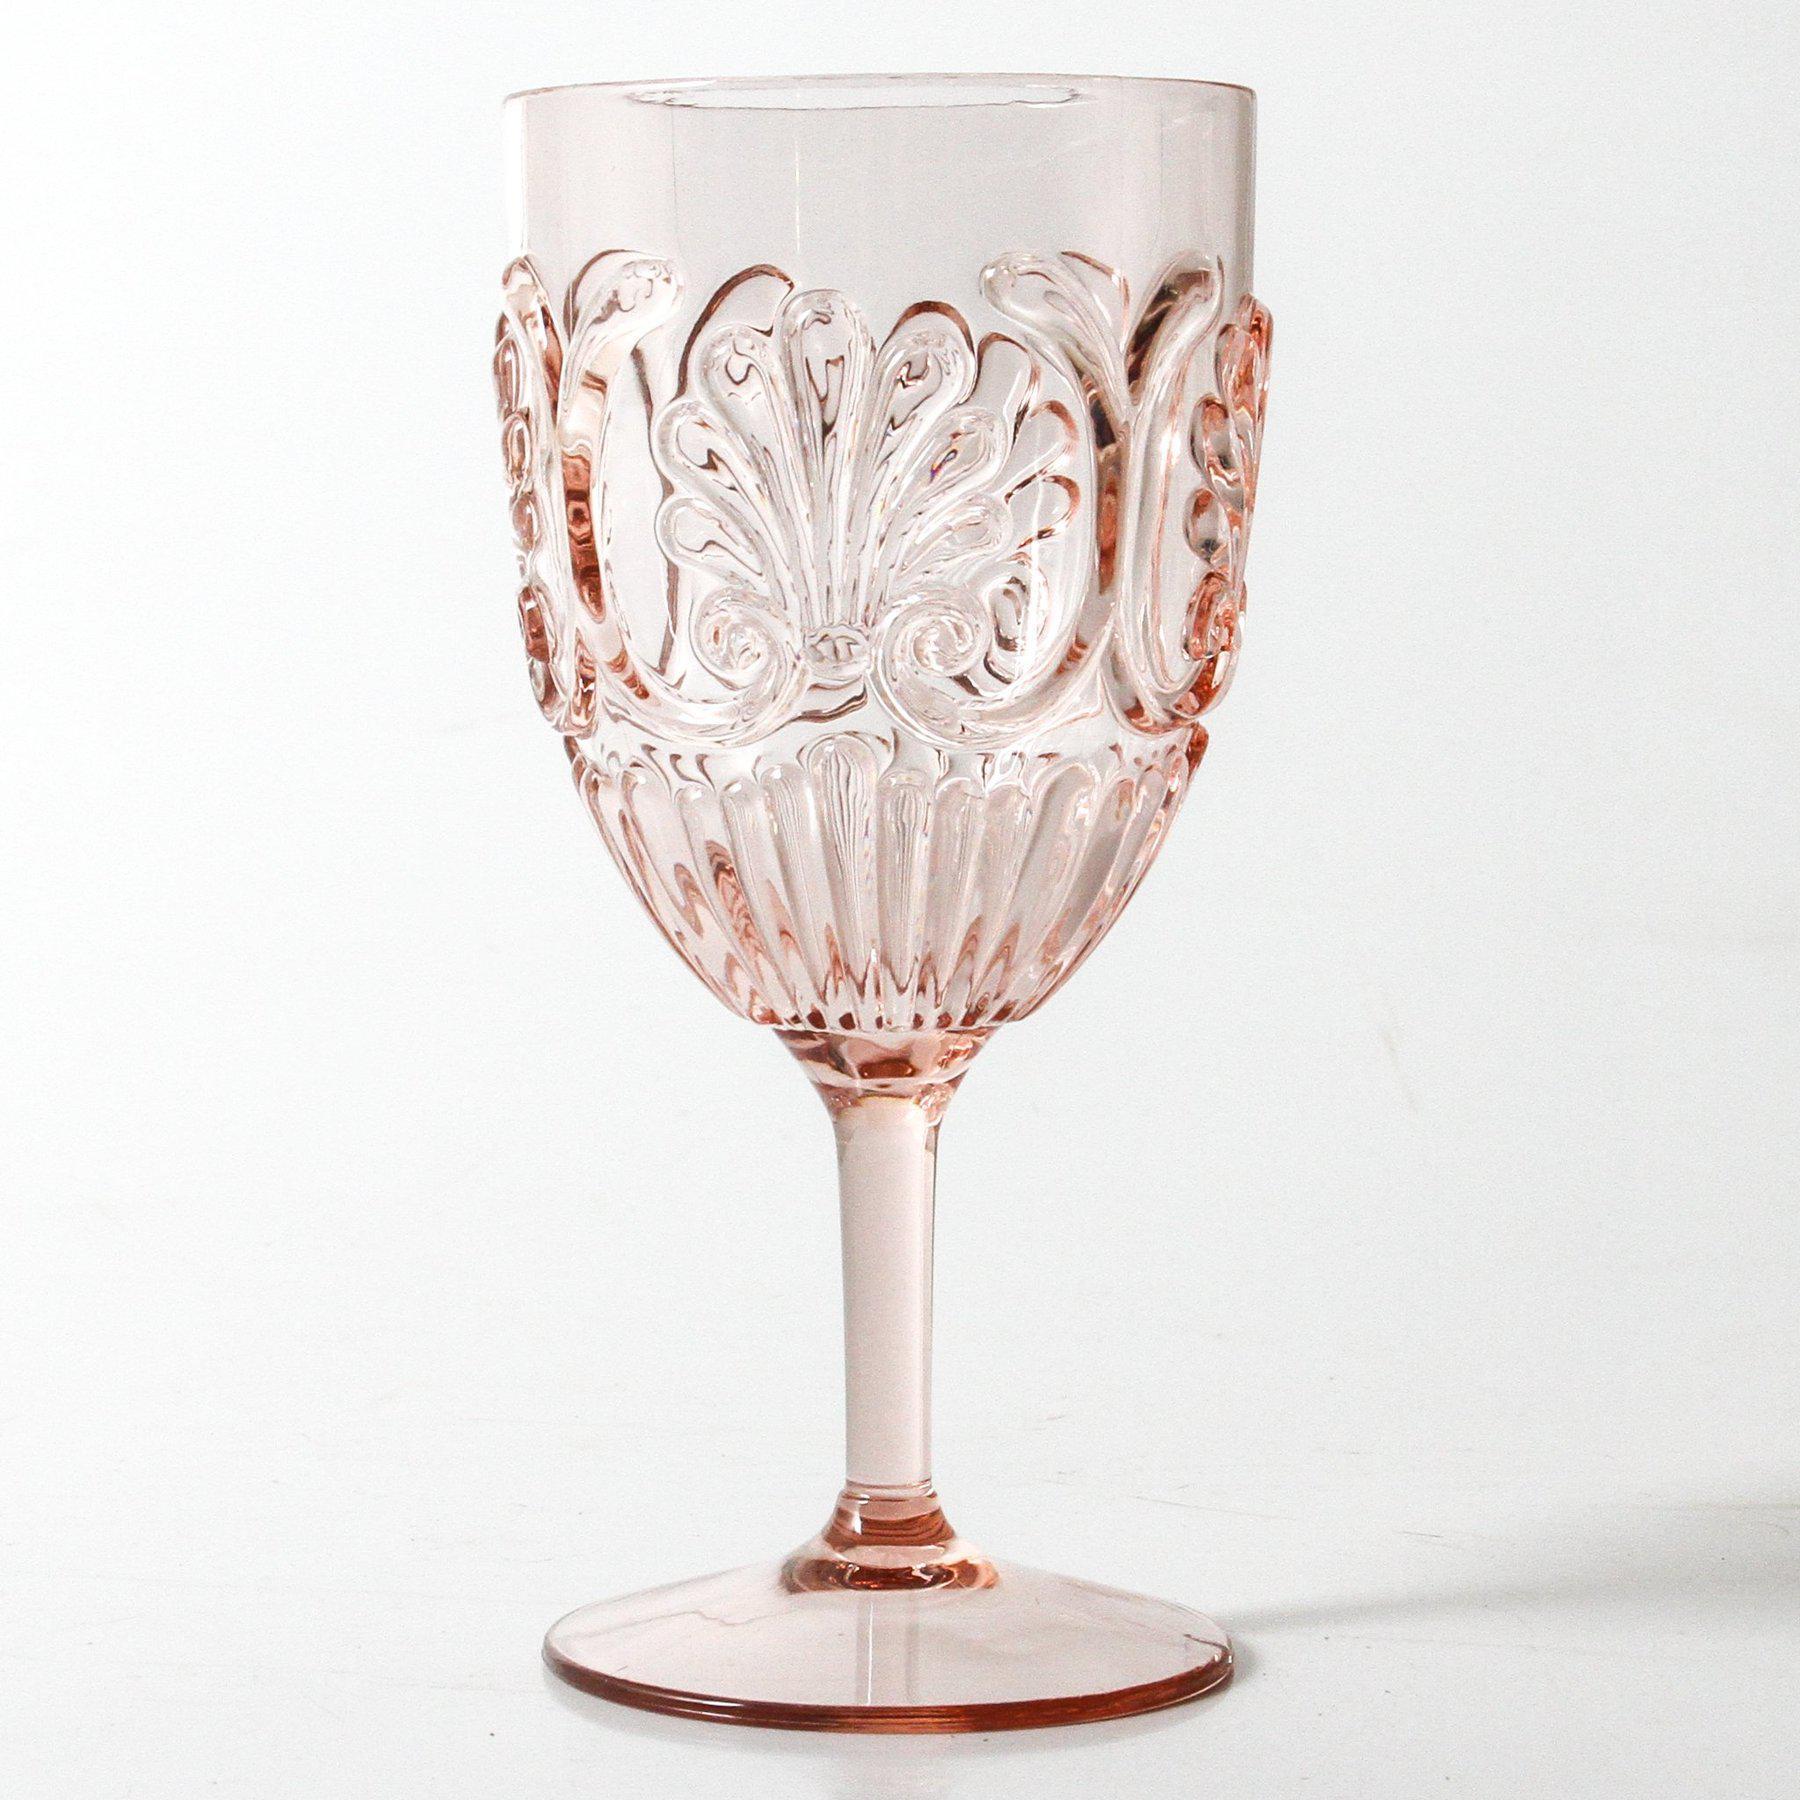 Flemington Acrylic Wine Glass - Pale Pink-Dining & Entertaining-Indigo Love-The Bay Room